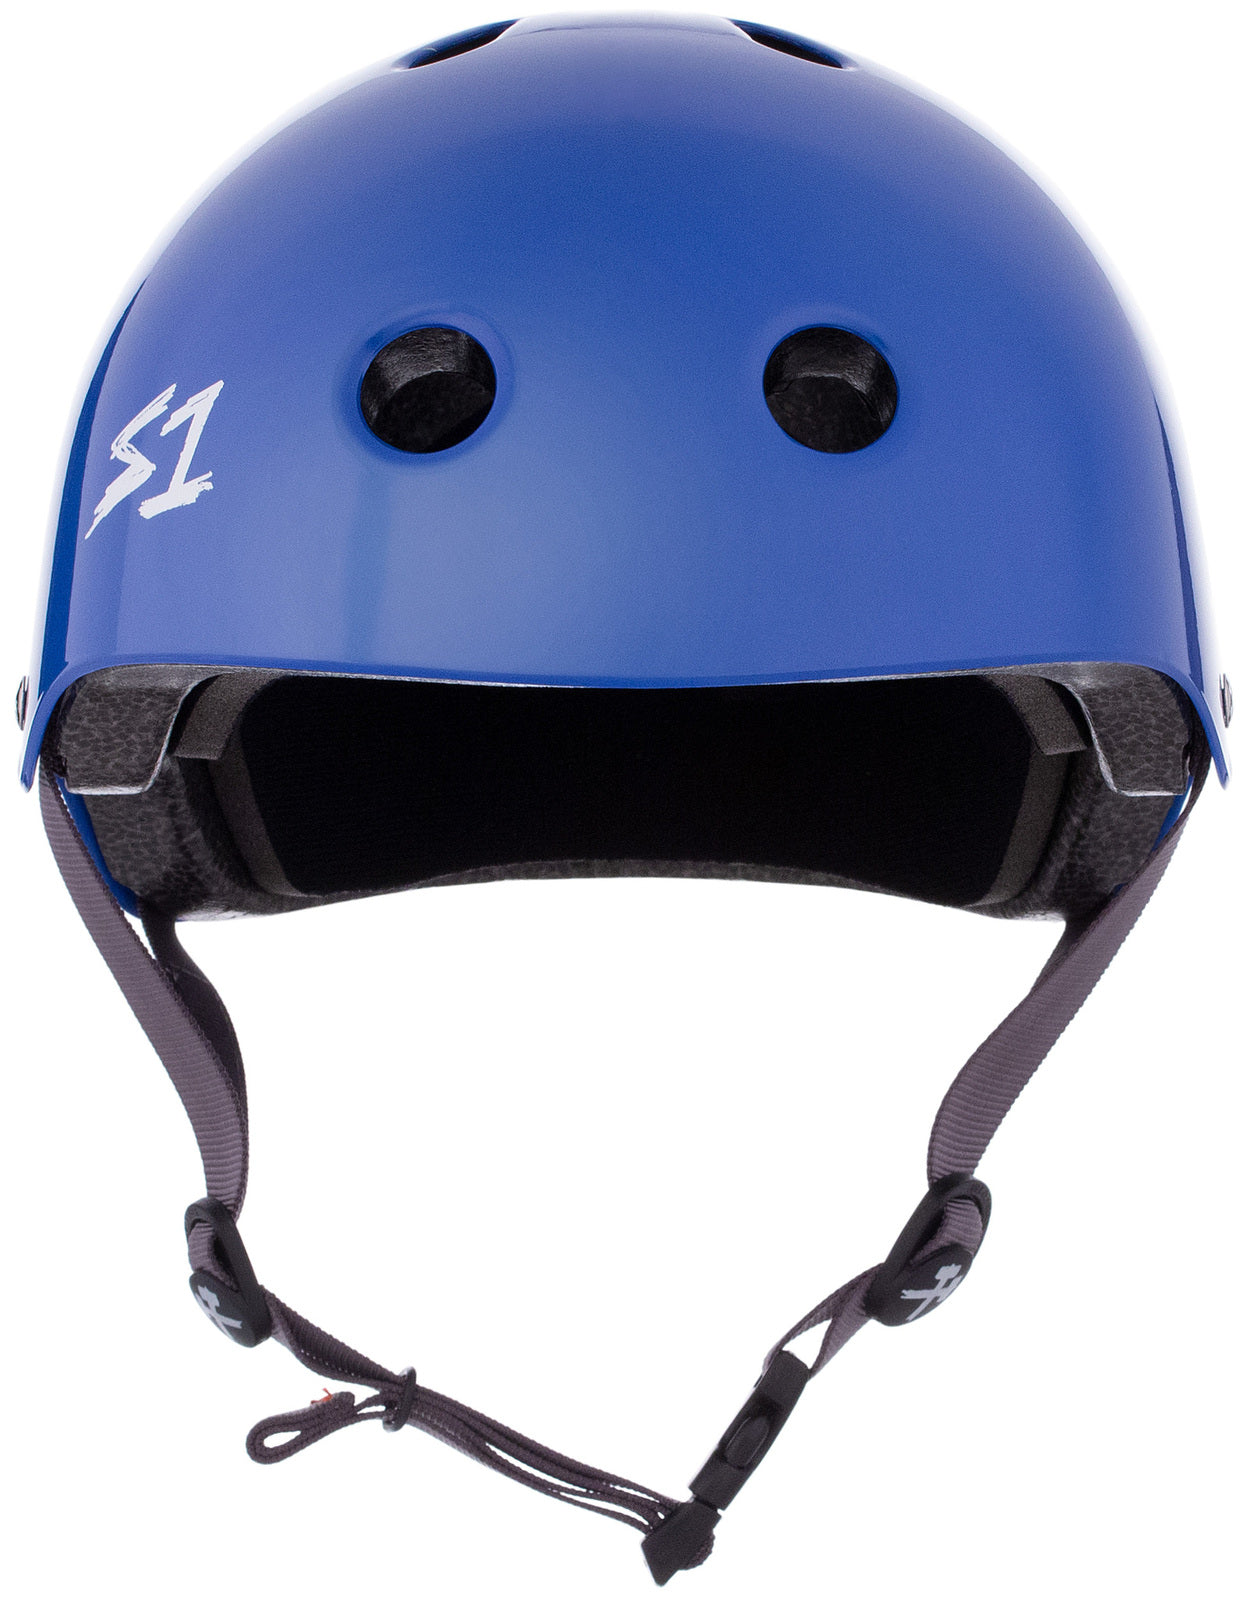 S-One Helmet Lifer - LA Blue Gloss